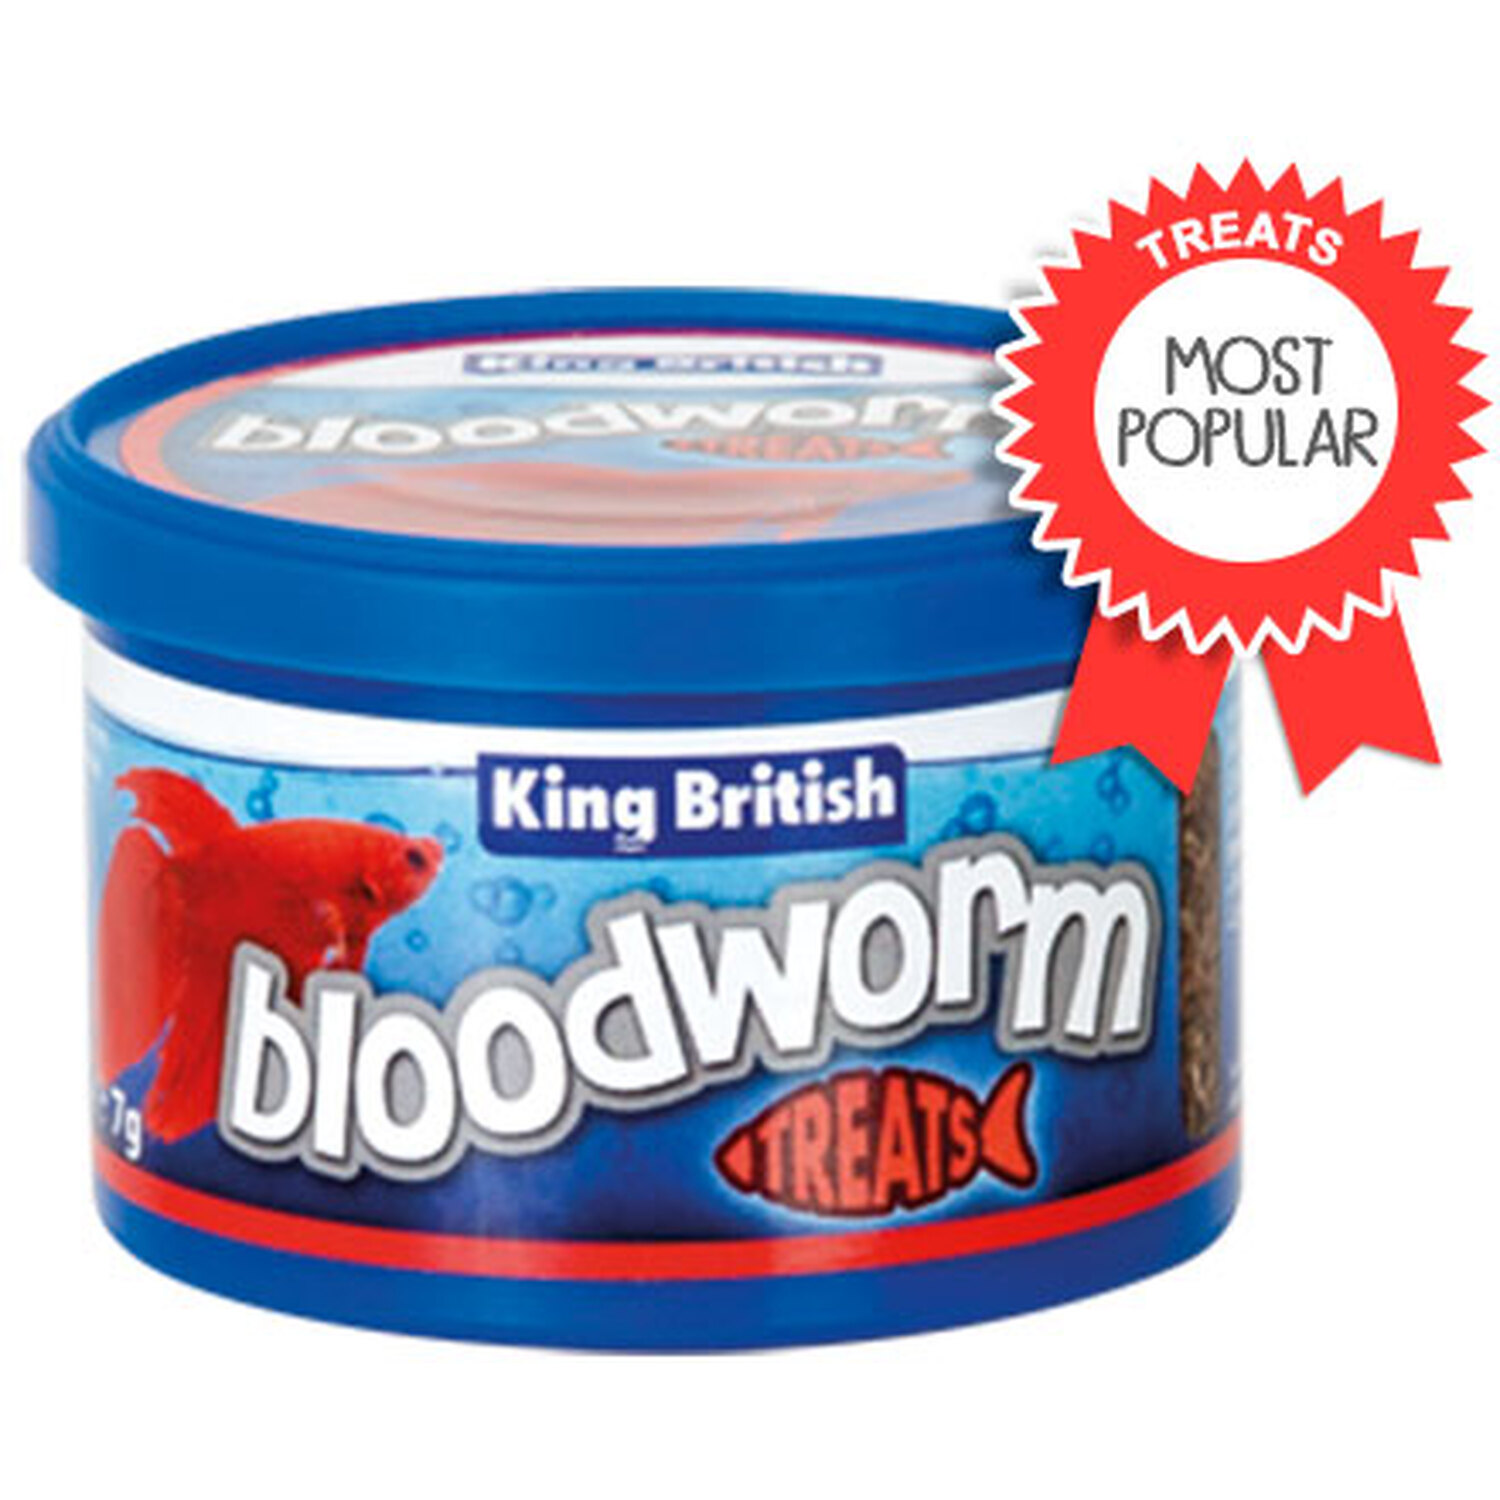 King British Bloodworm Treats Image